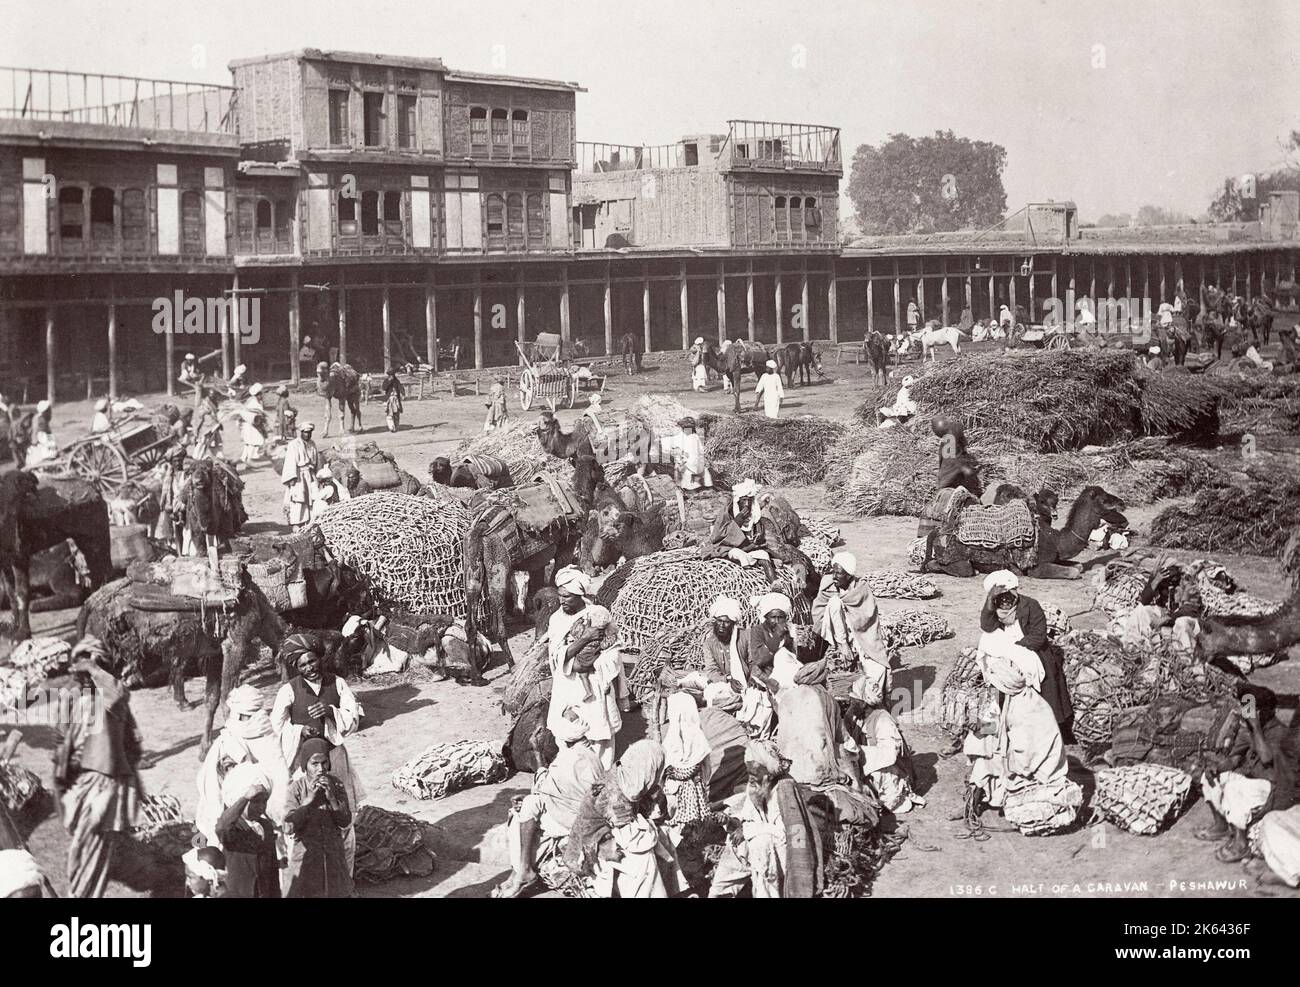 Vintage 19th century photograph, India - halt of a camel caravan, Peshawar, Khyber Pass, now Pakistan, Bourne and Shepherd studio Stock Photo